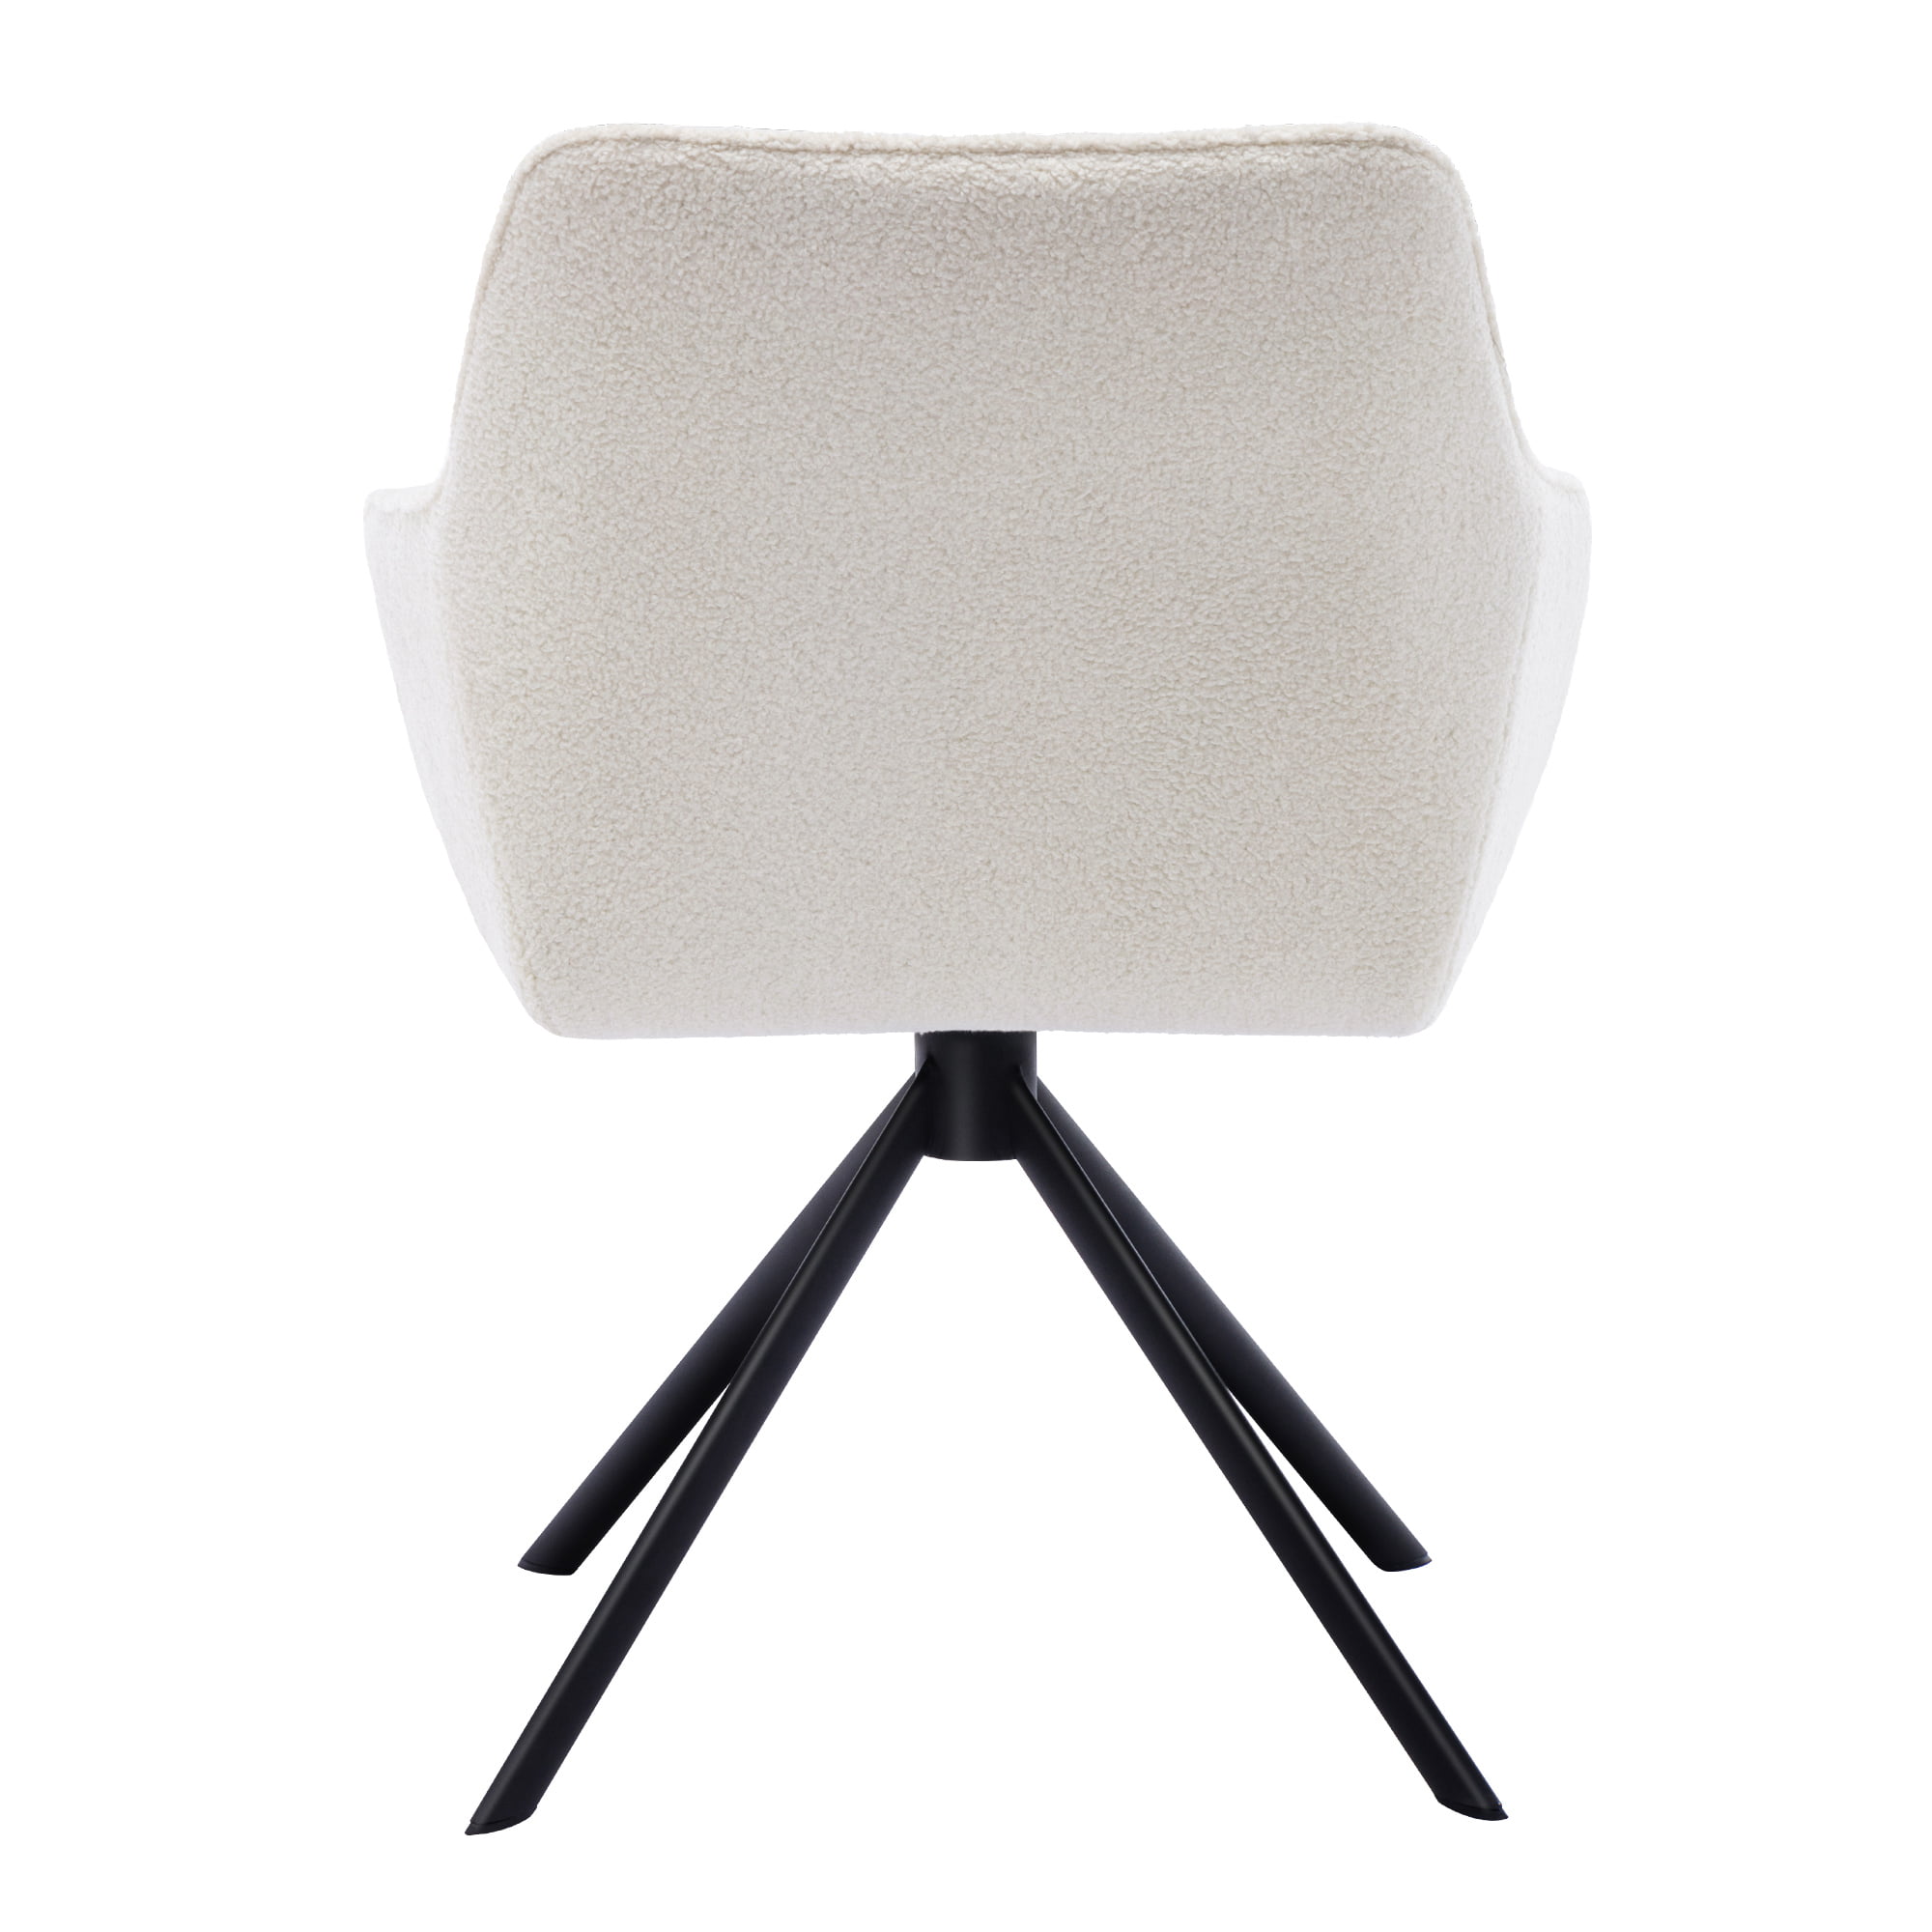 Fusion Furniture 28 WENDY LINEN 702-MURDOCKJASPER Accent Chair, Esprit  Decor Home Furnishings